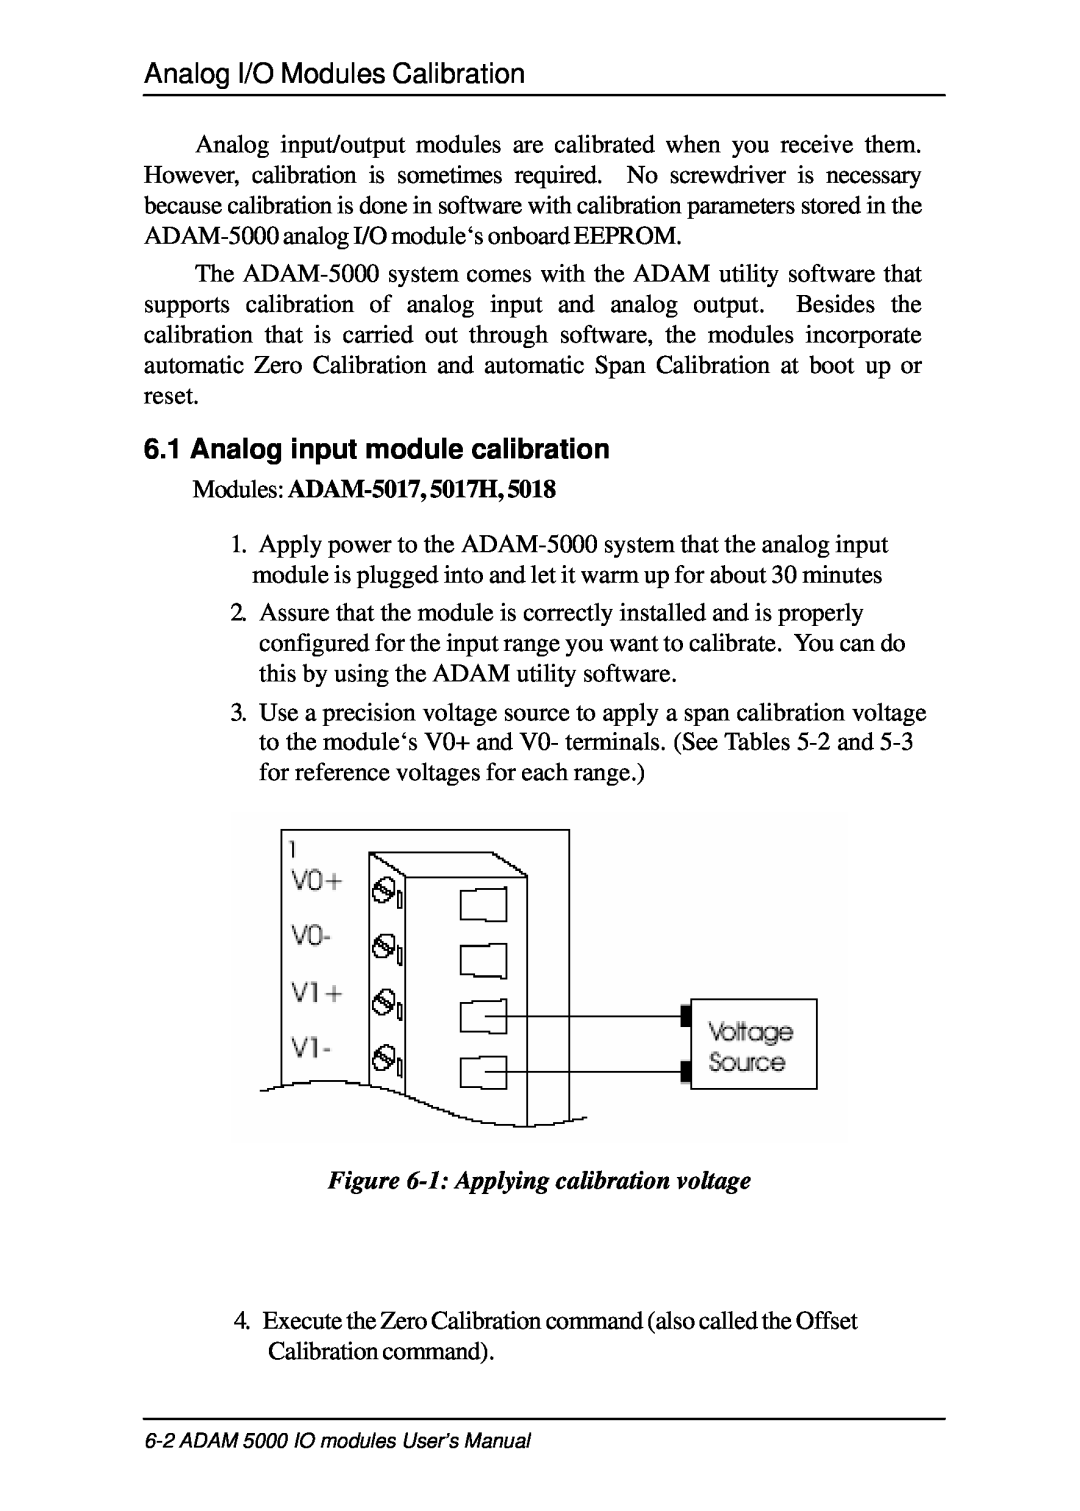 B&B Electronics 5000 Series Analog I/O Modules Calibration, Analog input module calibration, Modules ADAM-5017, 5017H 